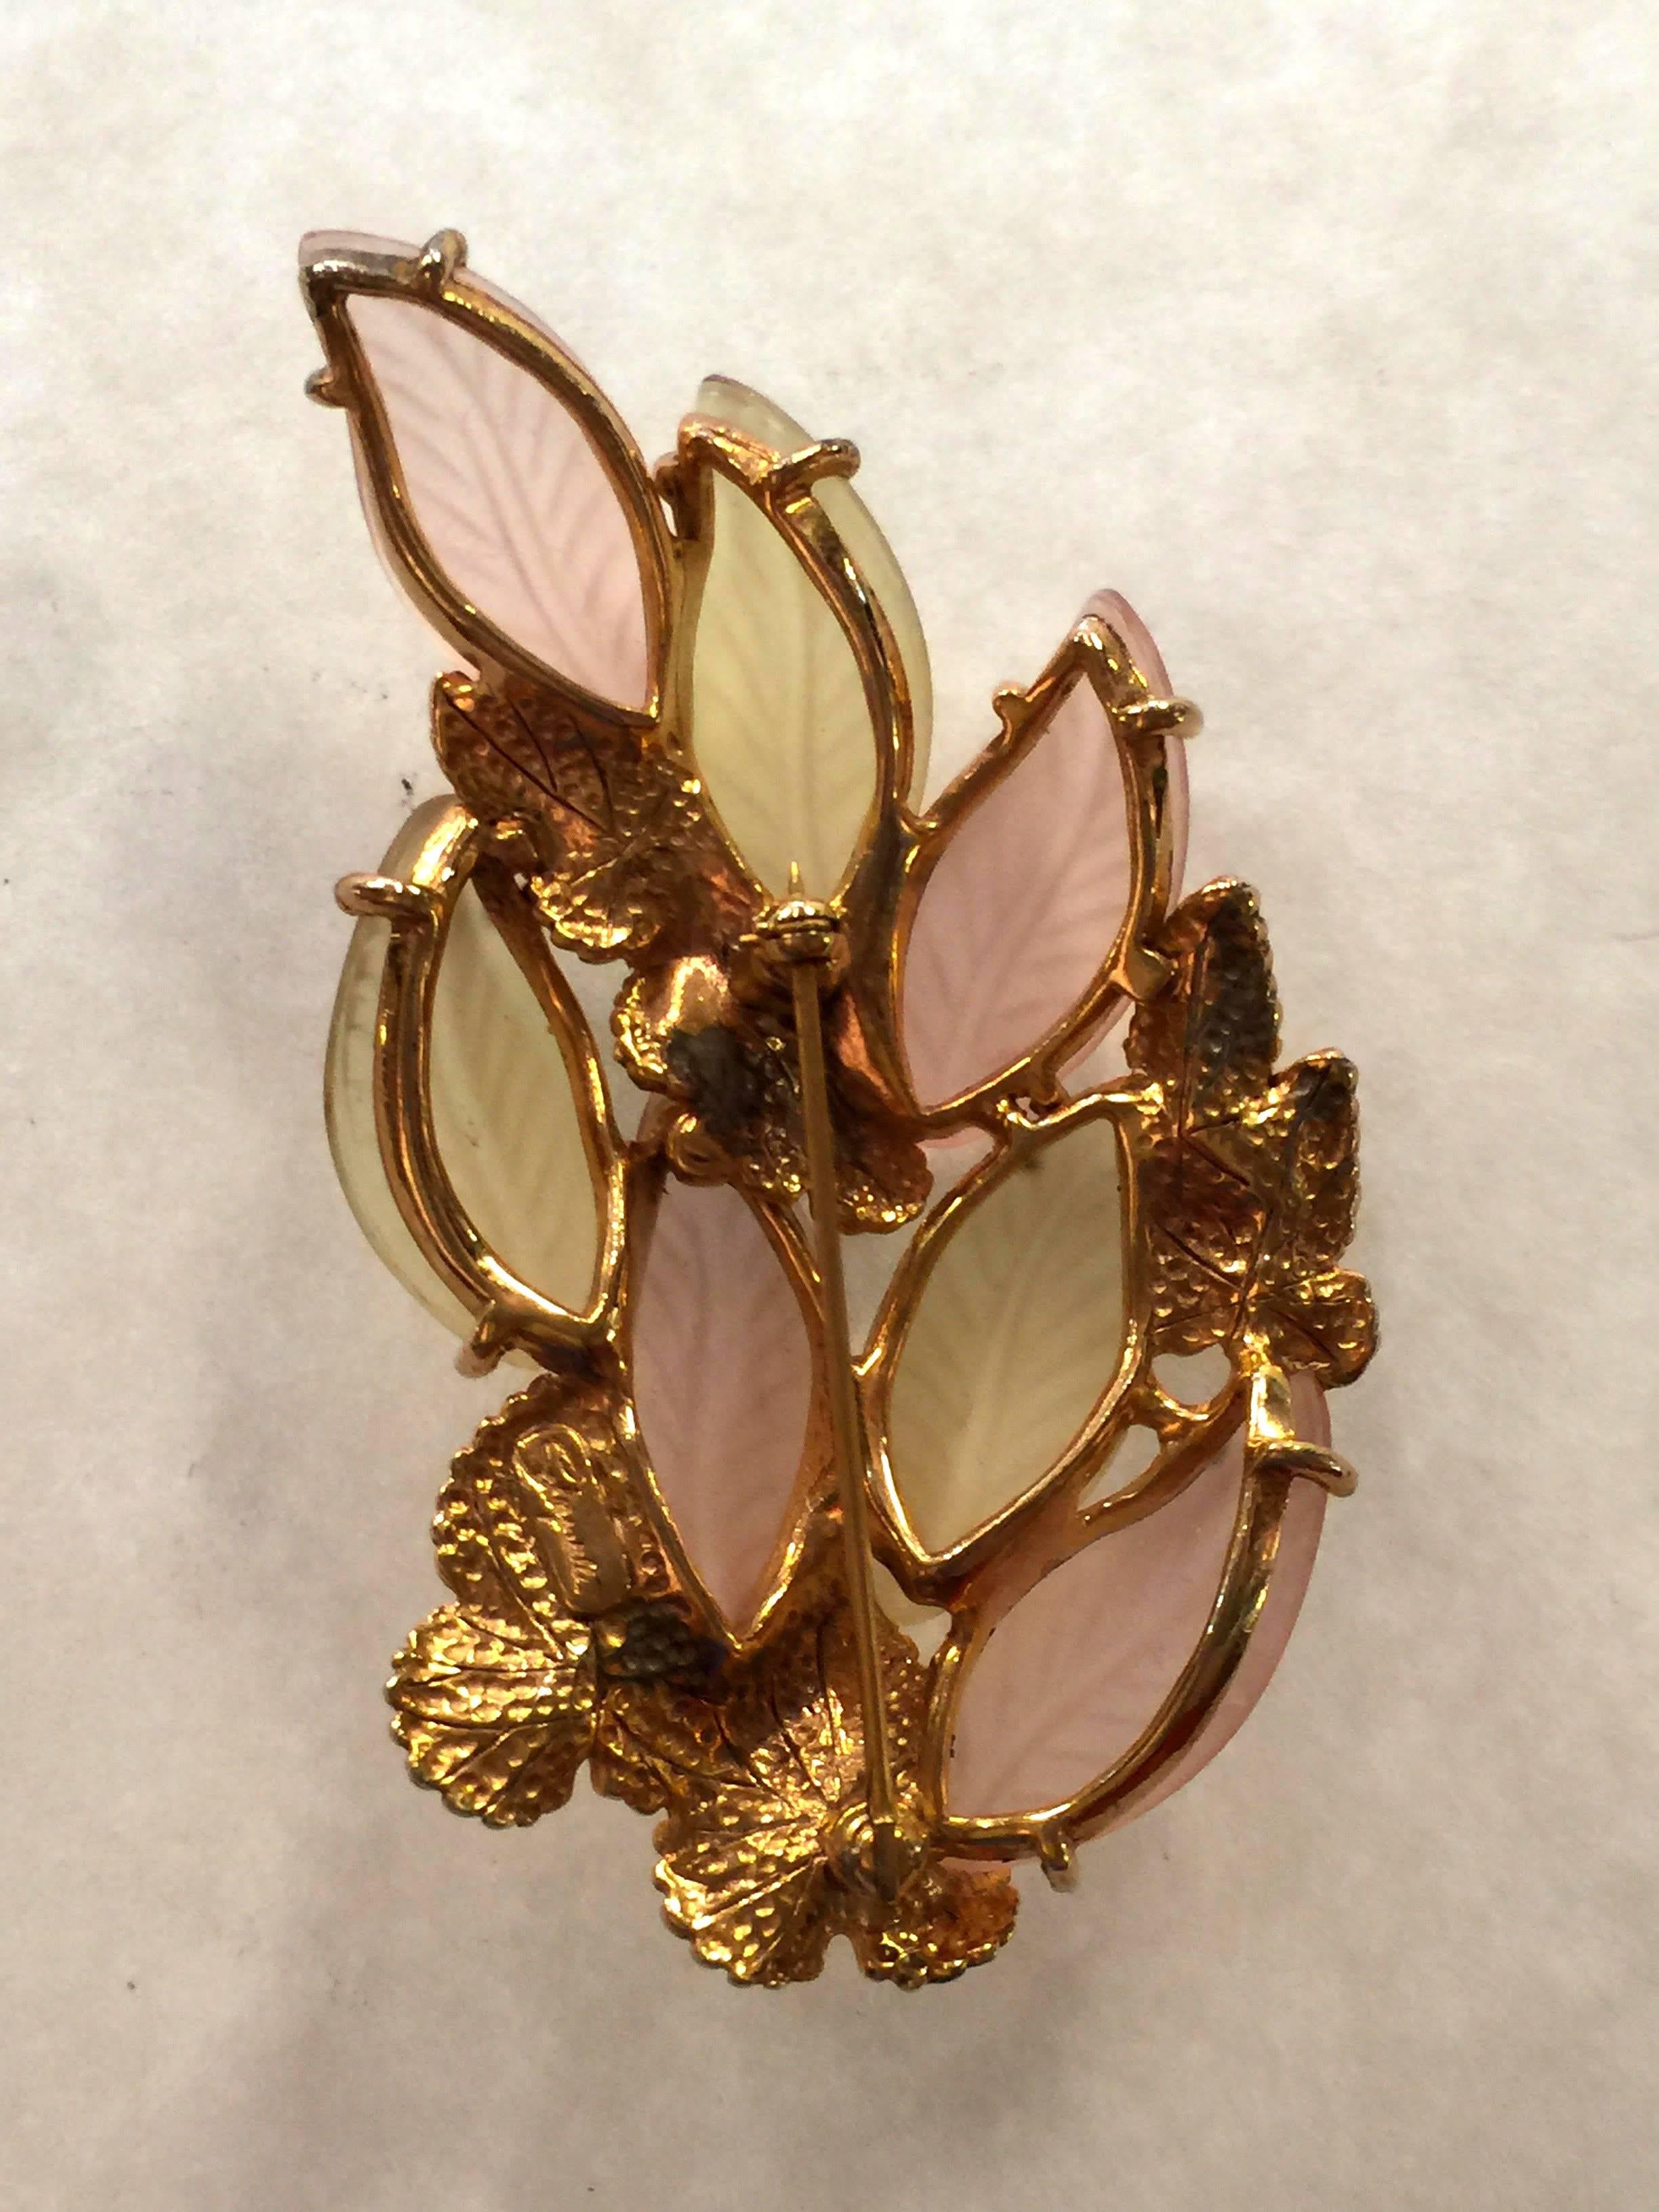 1950s Lisner/Schiaparelli Frosted Glass Antiqued Goldtone Veined Leaf Brooch/Pin For Sale 1